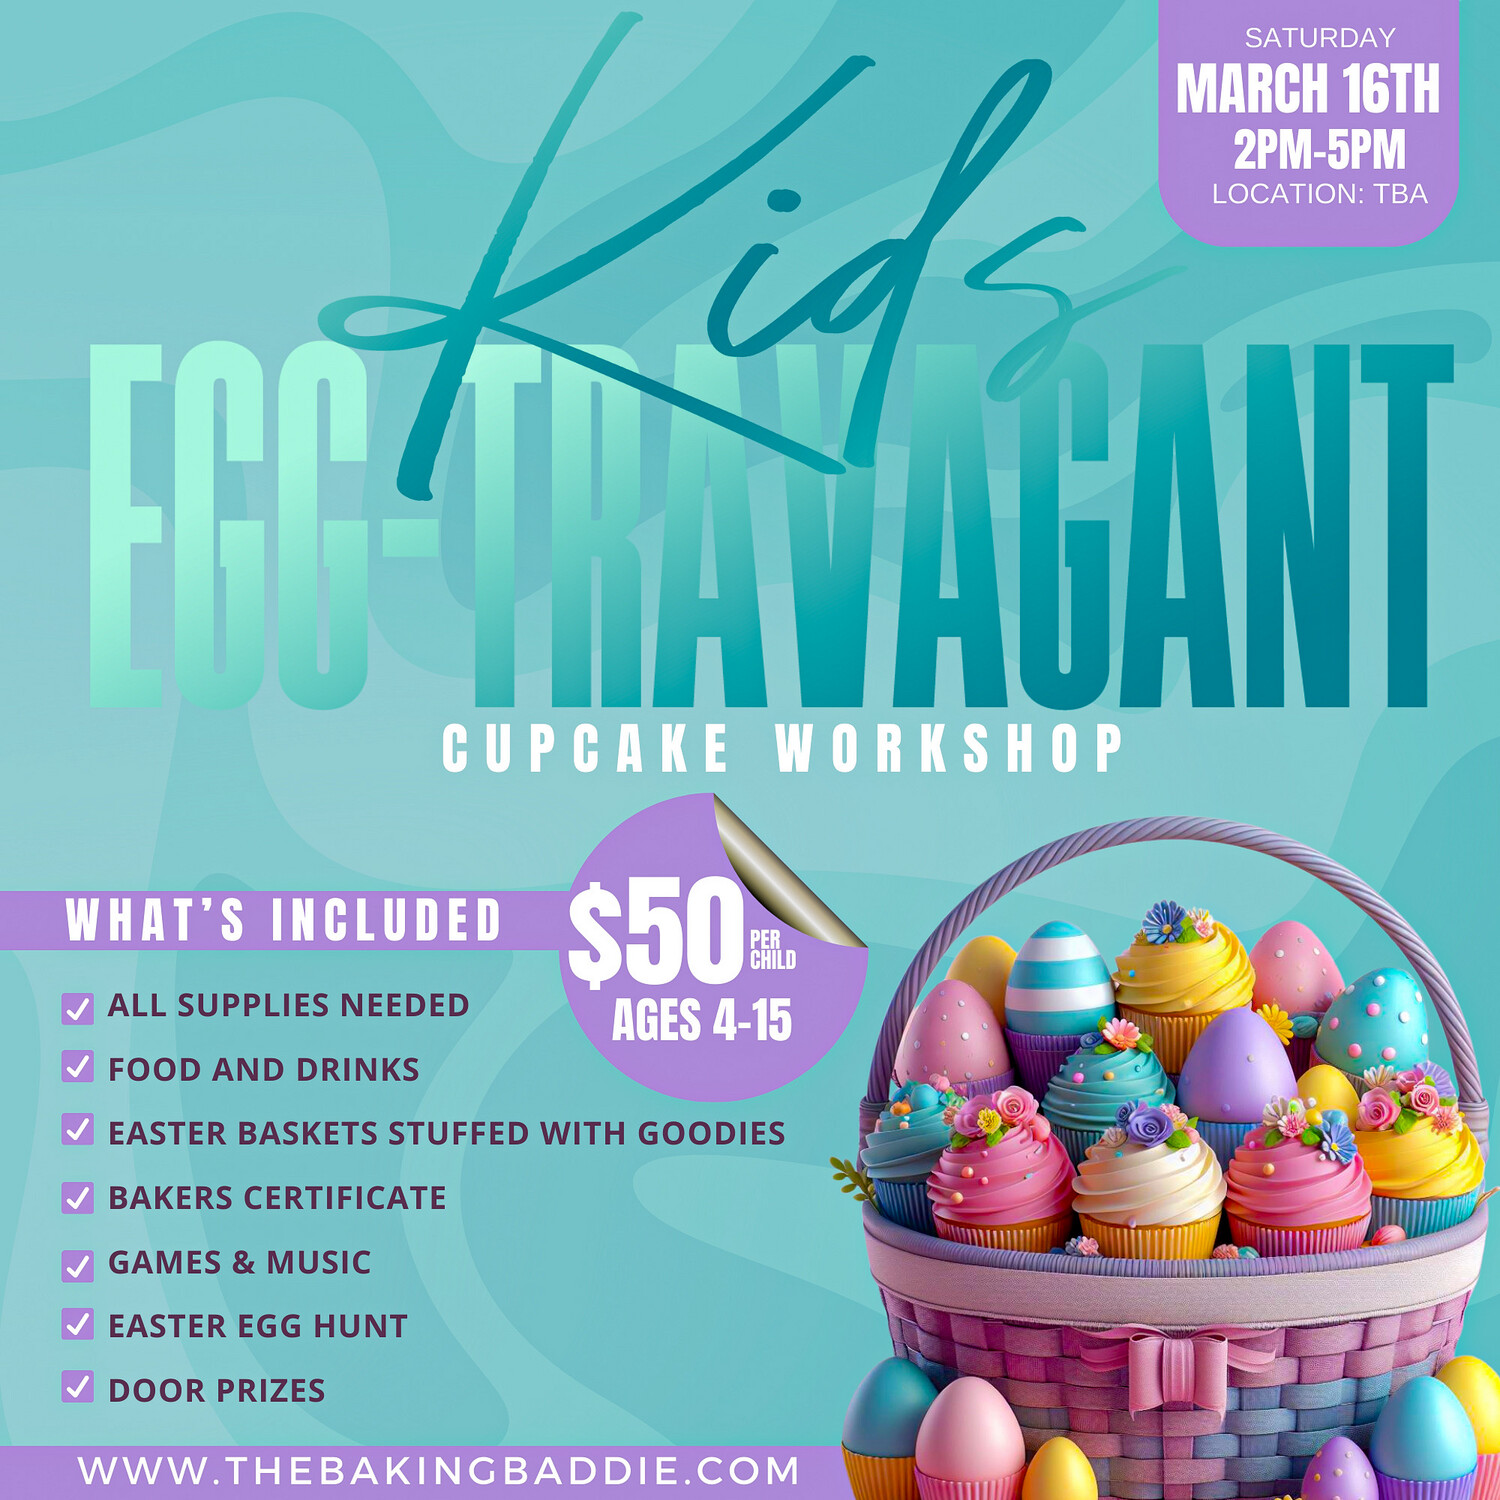 Egg-travagant Cupcake Workshop